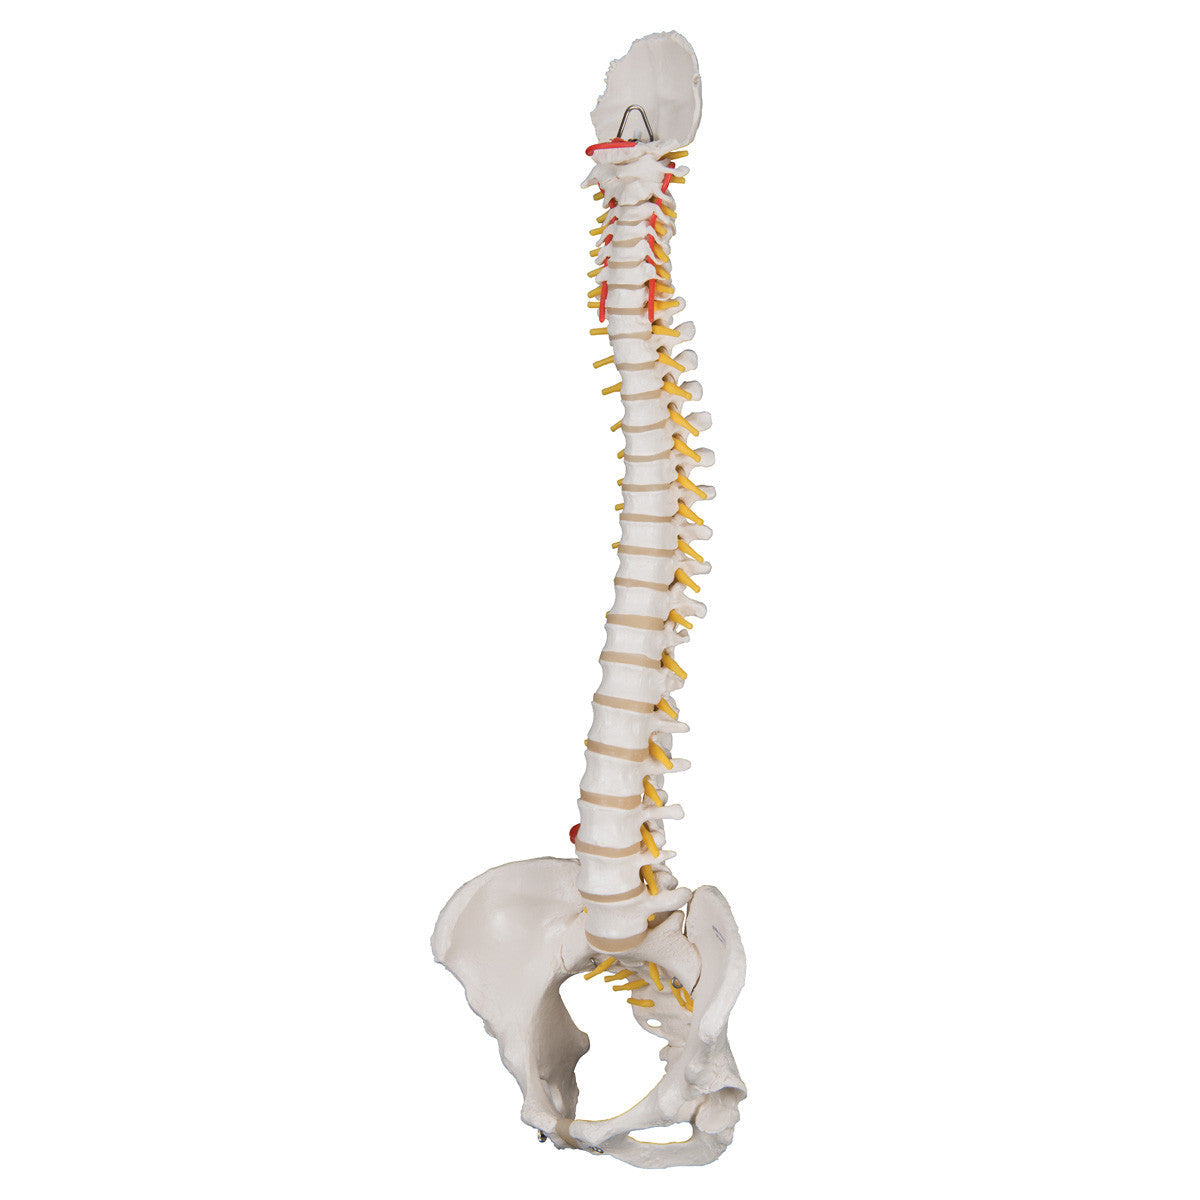 a58-4_03_1200_1200_classic-flexible-human-spine-model-with-female-pelvis-3b-smart-anatomy__32986.1589753025.1280.1280.jpg